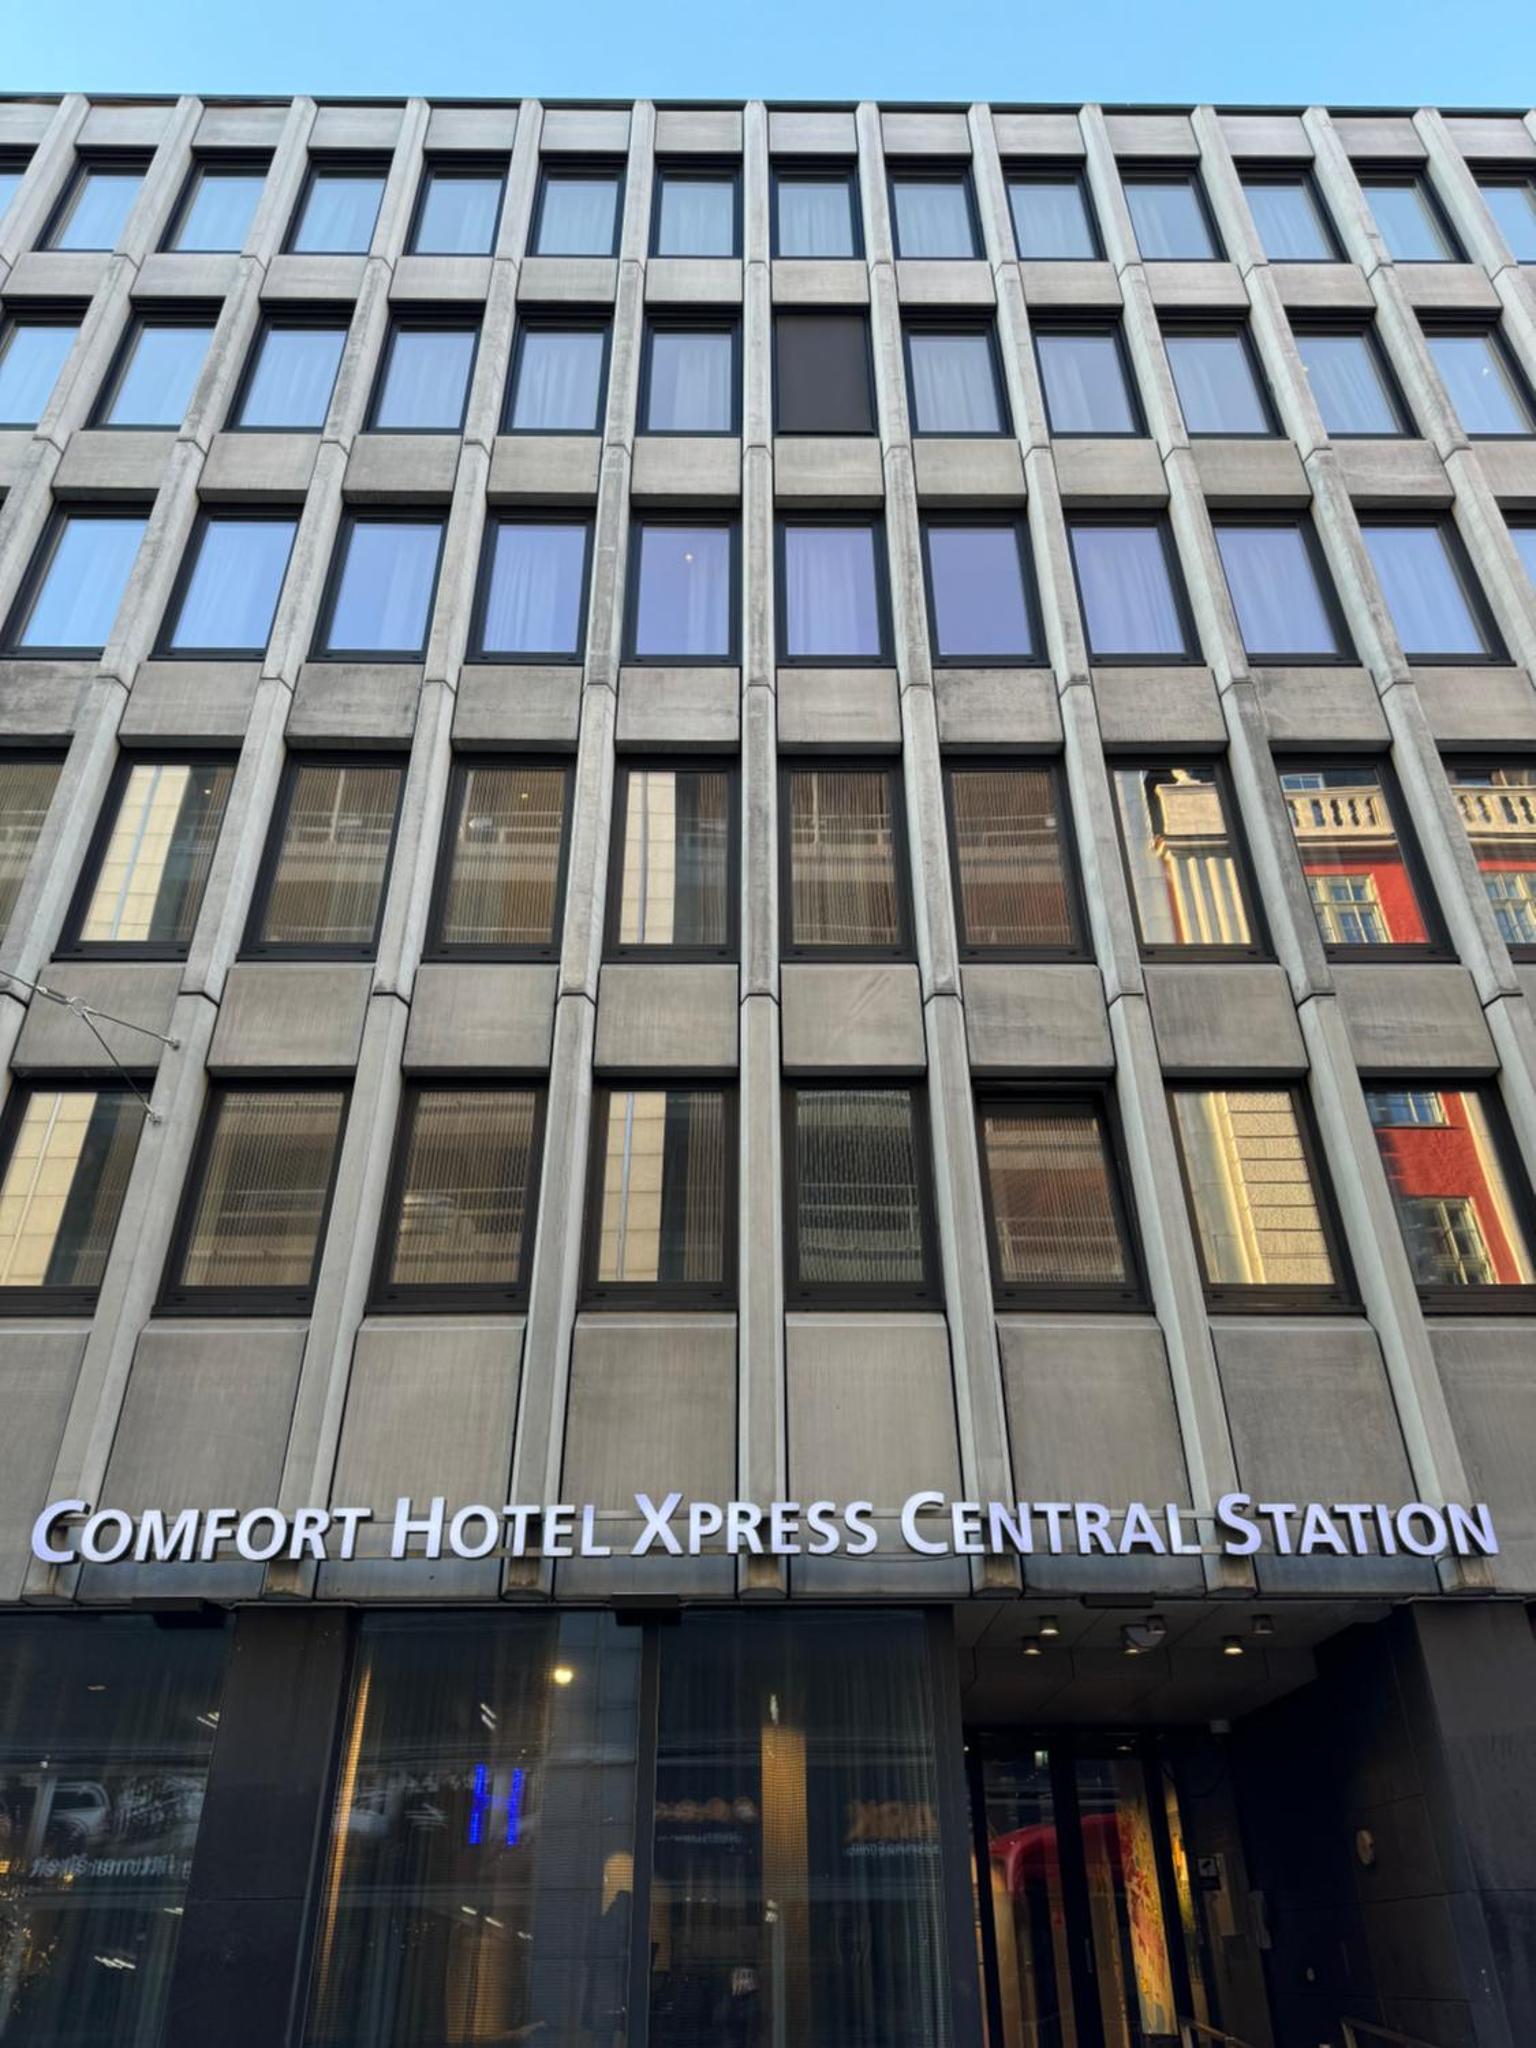 Comfort Hotel Xpress Central Station